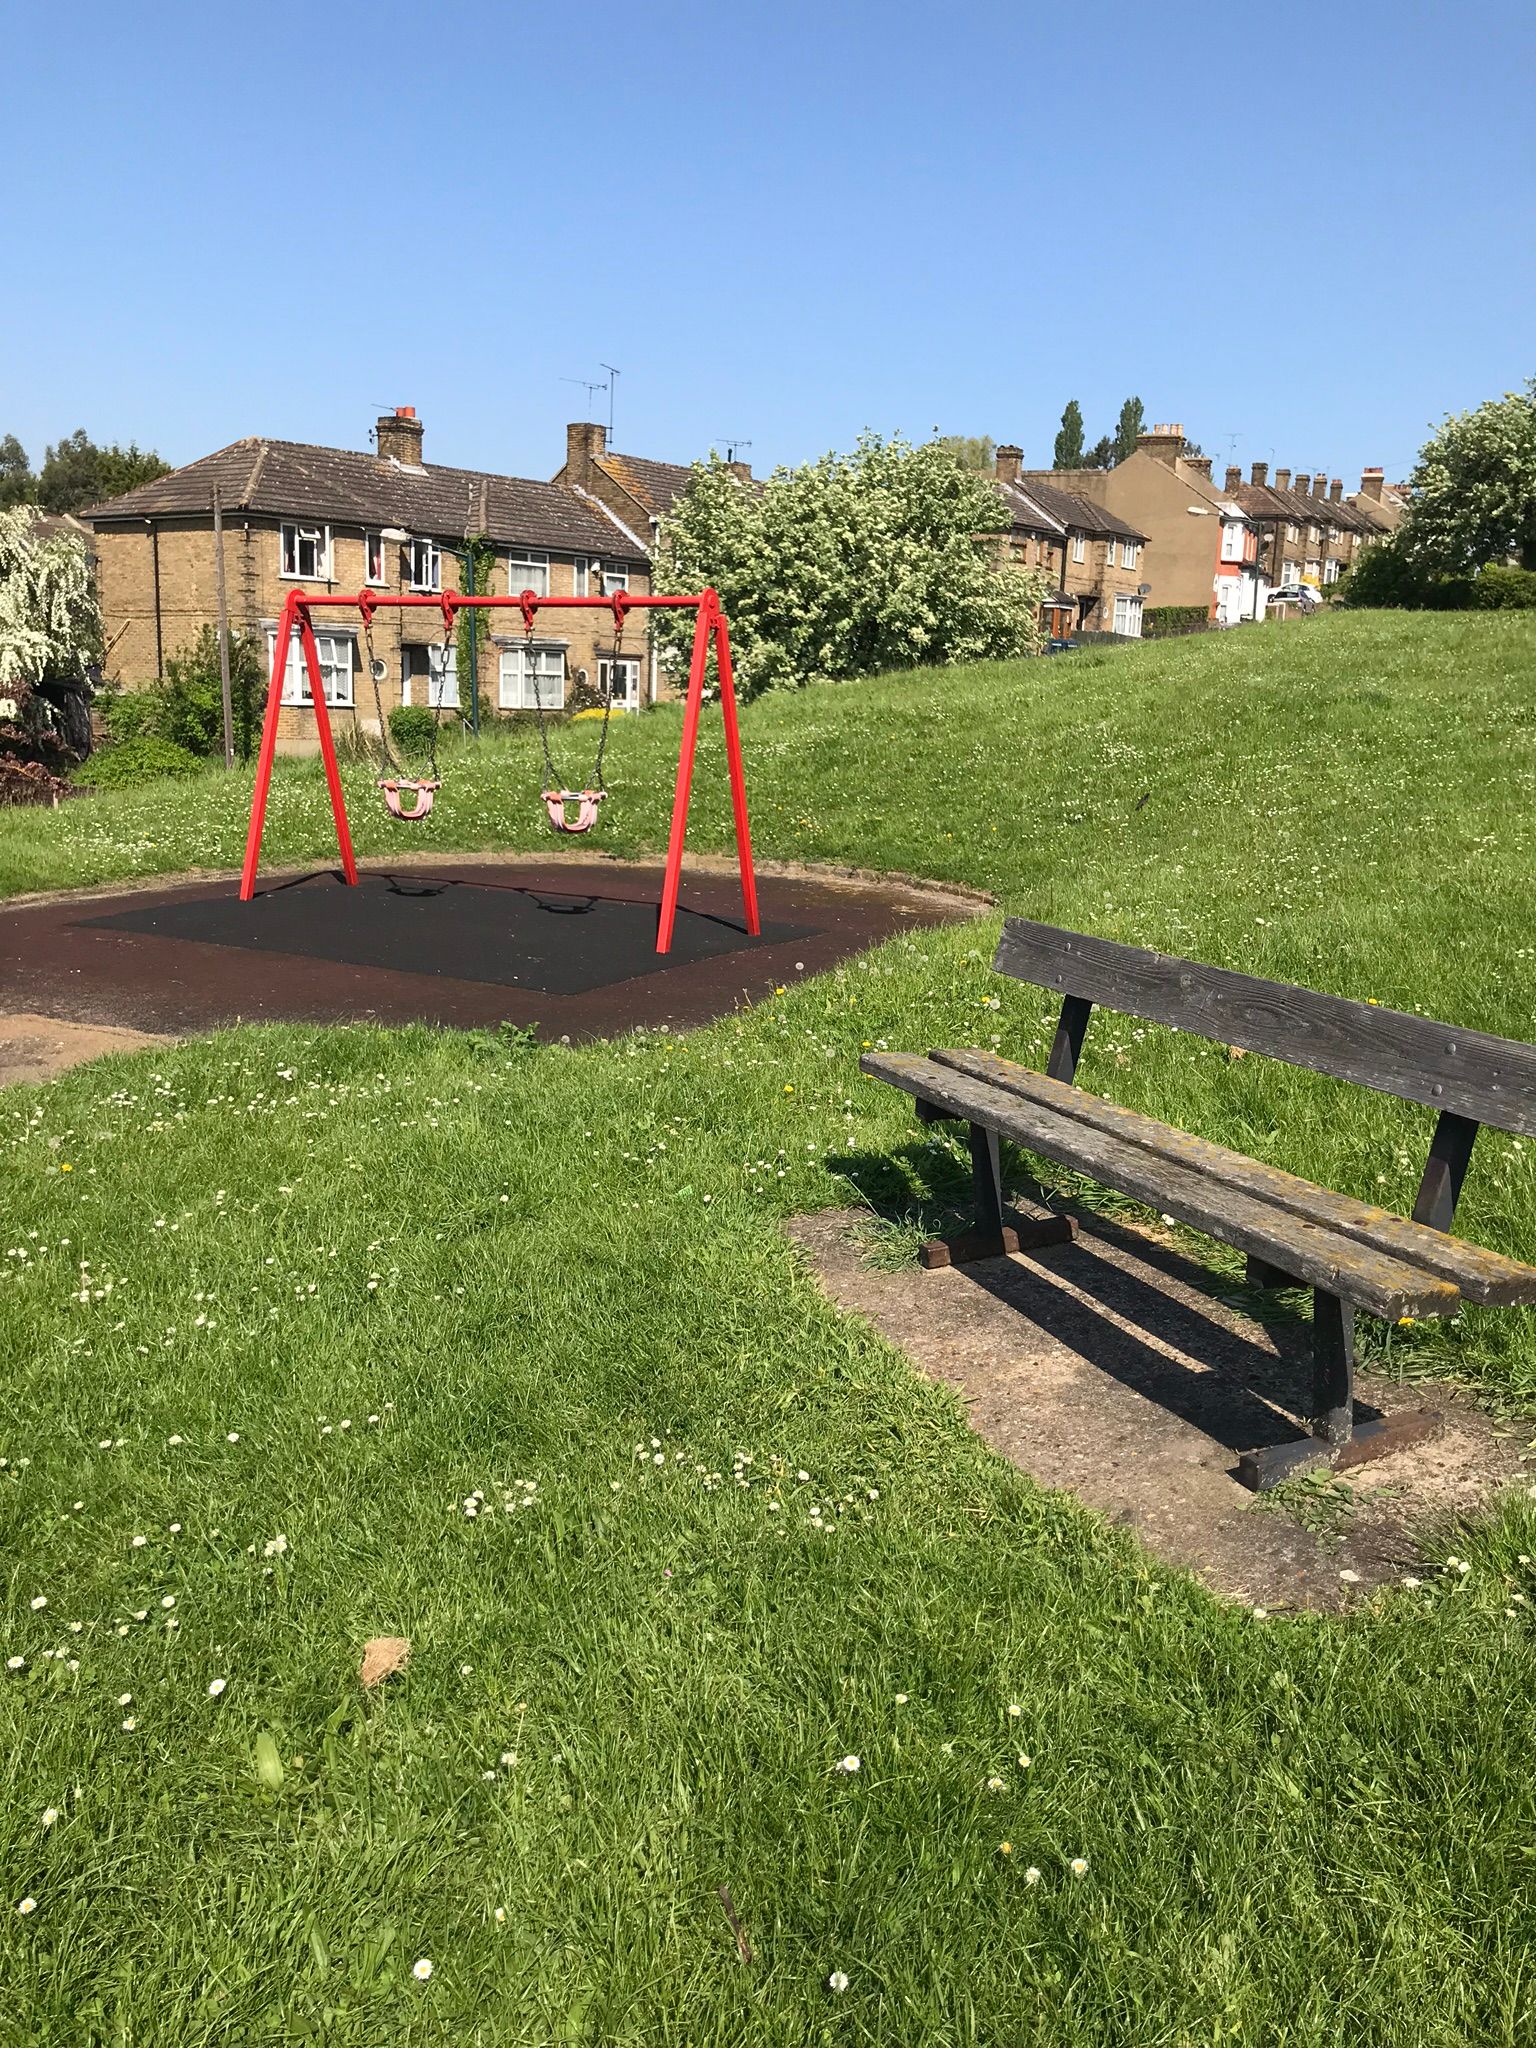 Swings at Goddington play area